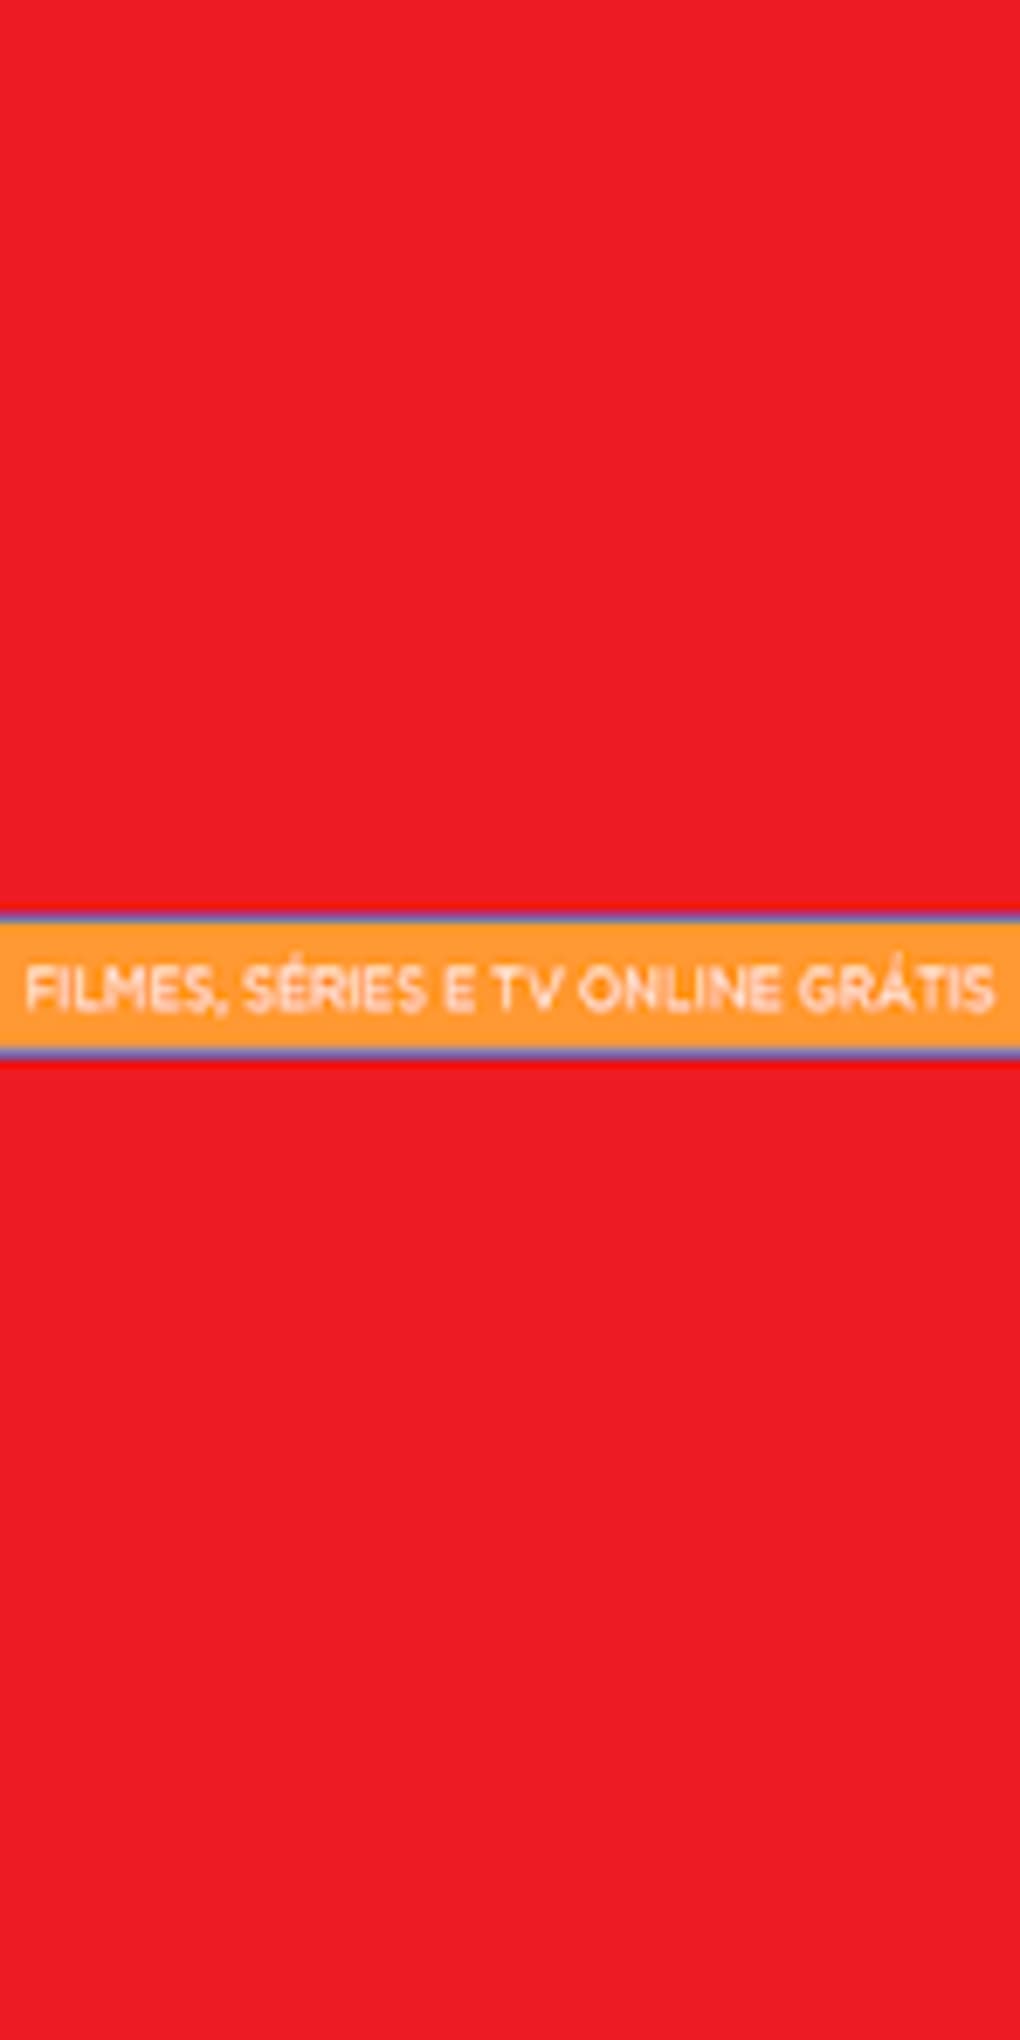 Download ObaFlix - Filmes, Série e Animes Online on PC with MEmu